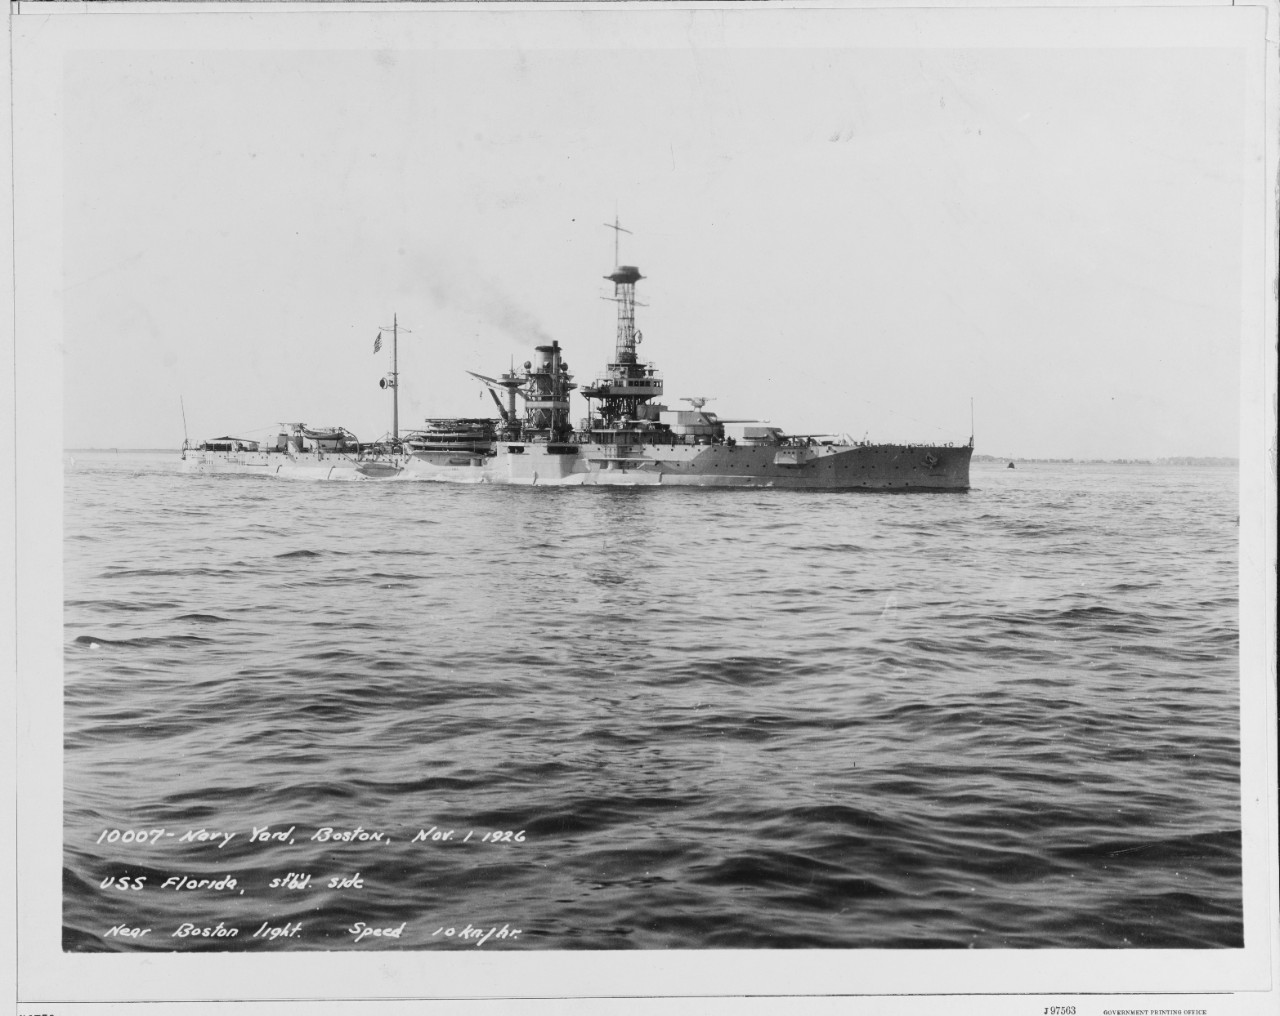 USS FLORIDA (BB-30)